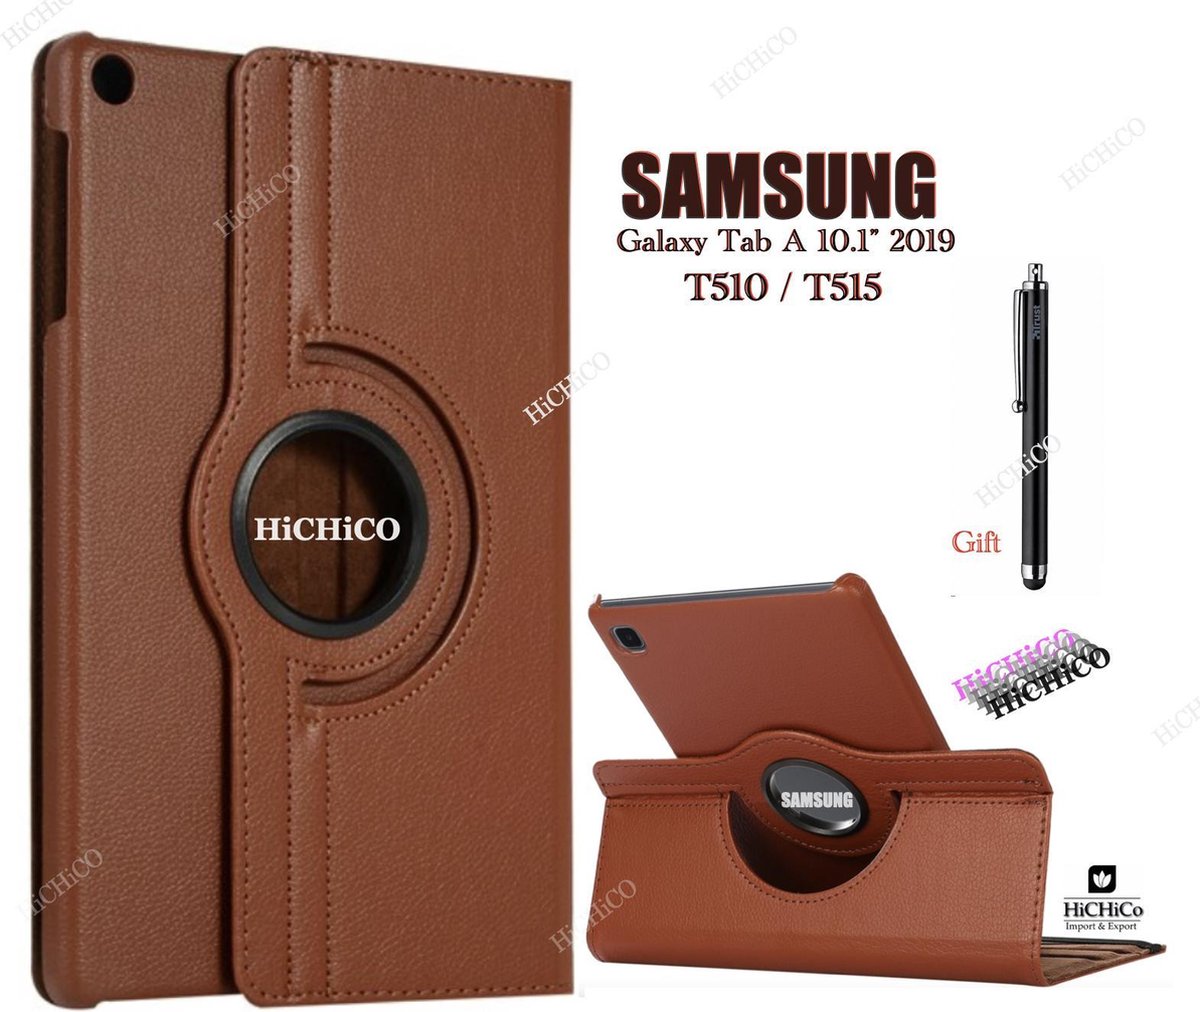 HiCHiCO Tablet Hoes voor Samsung Galaxy Tab A 10.1” 2019, Galaxy Tab T510 / T515 Hoesje, 360 Graden Draaibaar Tablet Case Bruin met Stylus Pen